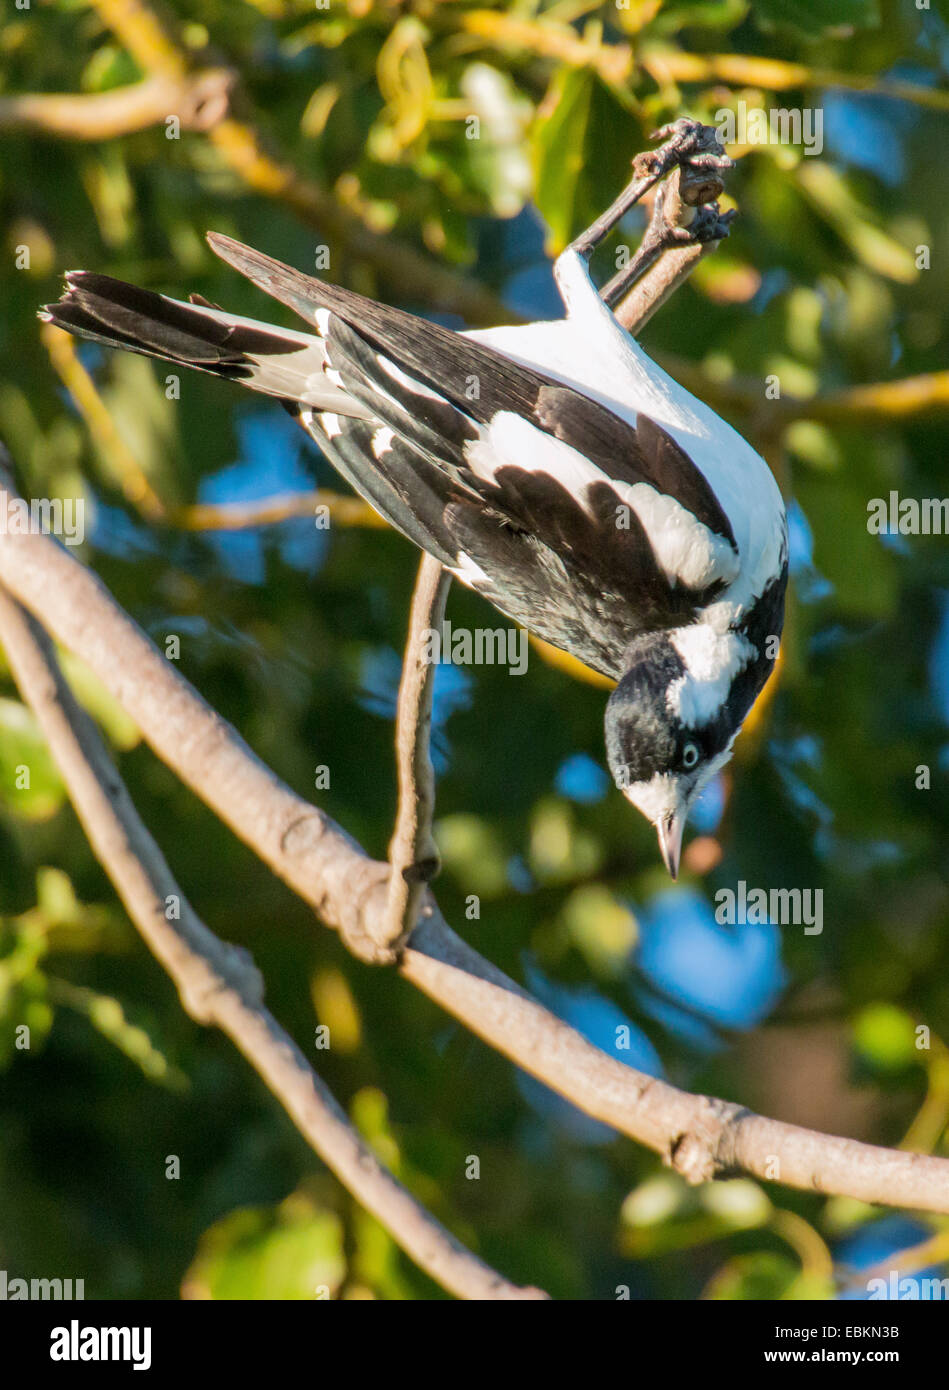 Black-throated butcher bird (Cracticus nigrogularis), l'escalade dans un arbre, l'Australie, l'Australie Occidentale Banque D'Images